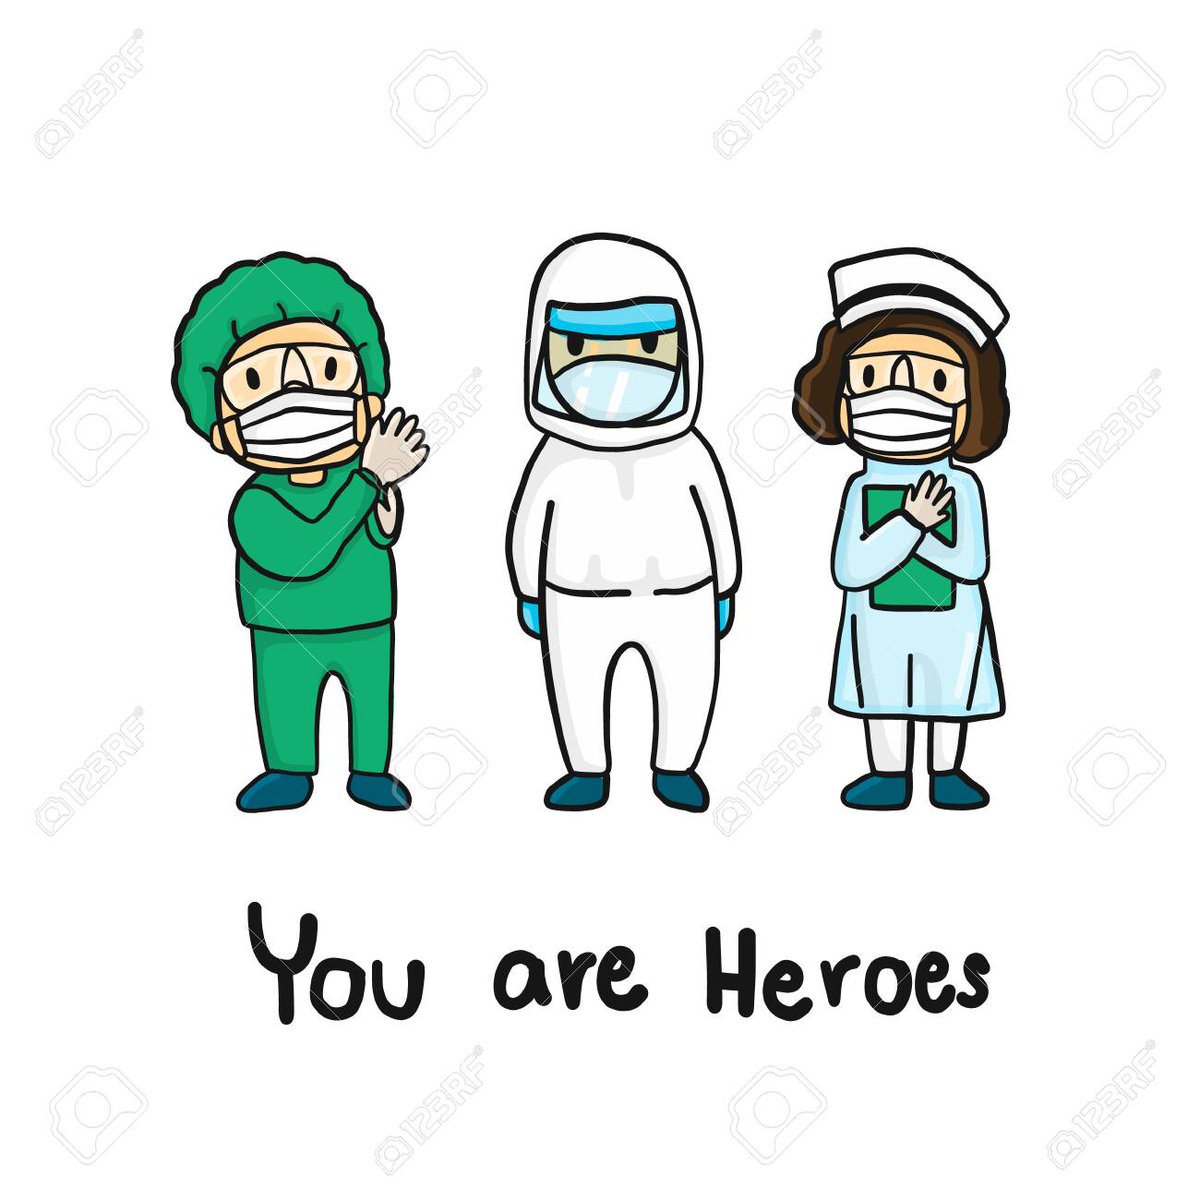 #CourageisBeautiful in honour of #SierraLeonean #nurses and #doctors as frontline heroes in the war against #Covid_19.  

#nursesareheroes 
#doctorsareheroes 
#CareFromDove 
#salonetwitter

@UmaruFofana @AmbroseJames12 @TomVensEU @UKinSierraLeone @USEmbFreetown @IrlEmbFreetown